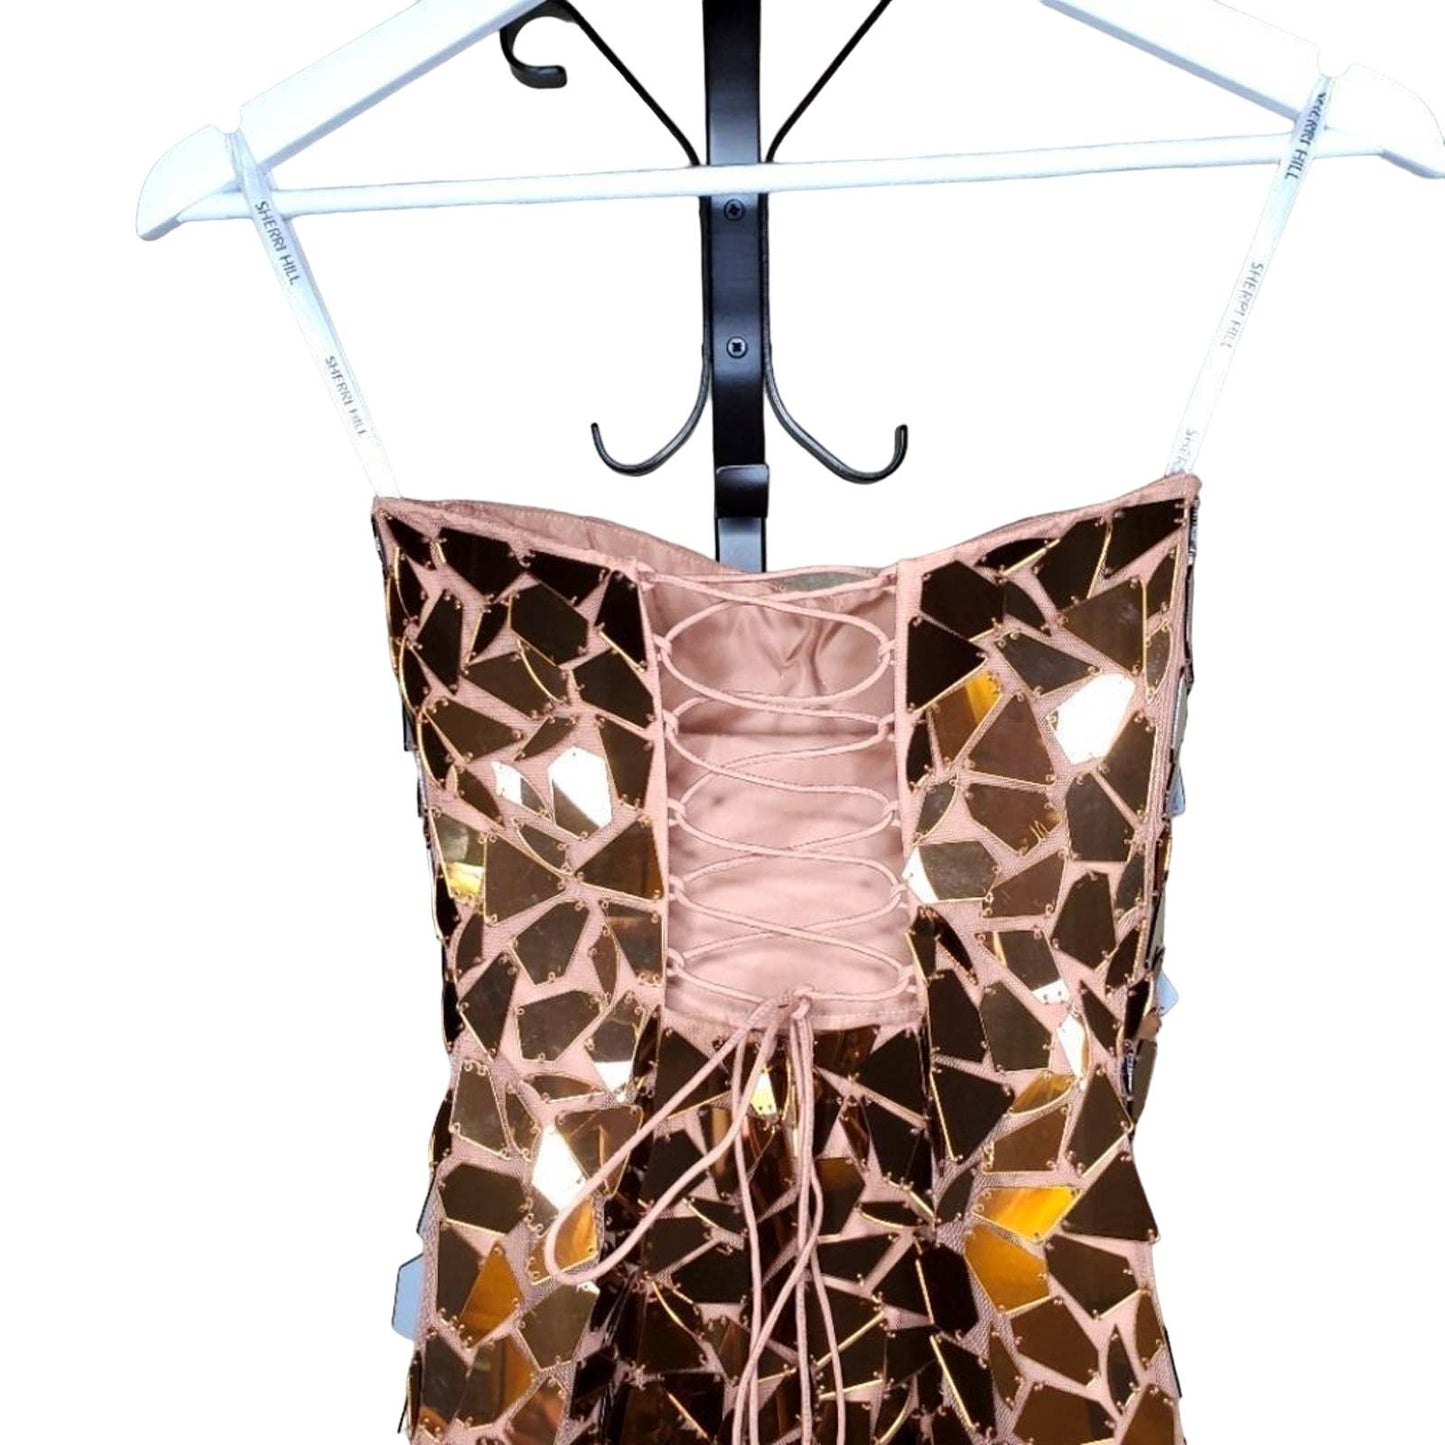 Sherri Hill Short Strapless Scuba Dress with Lace Up Back, Bronze, Size 00